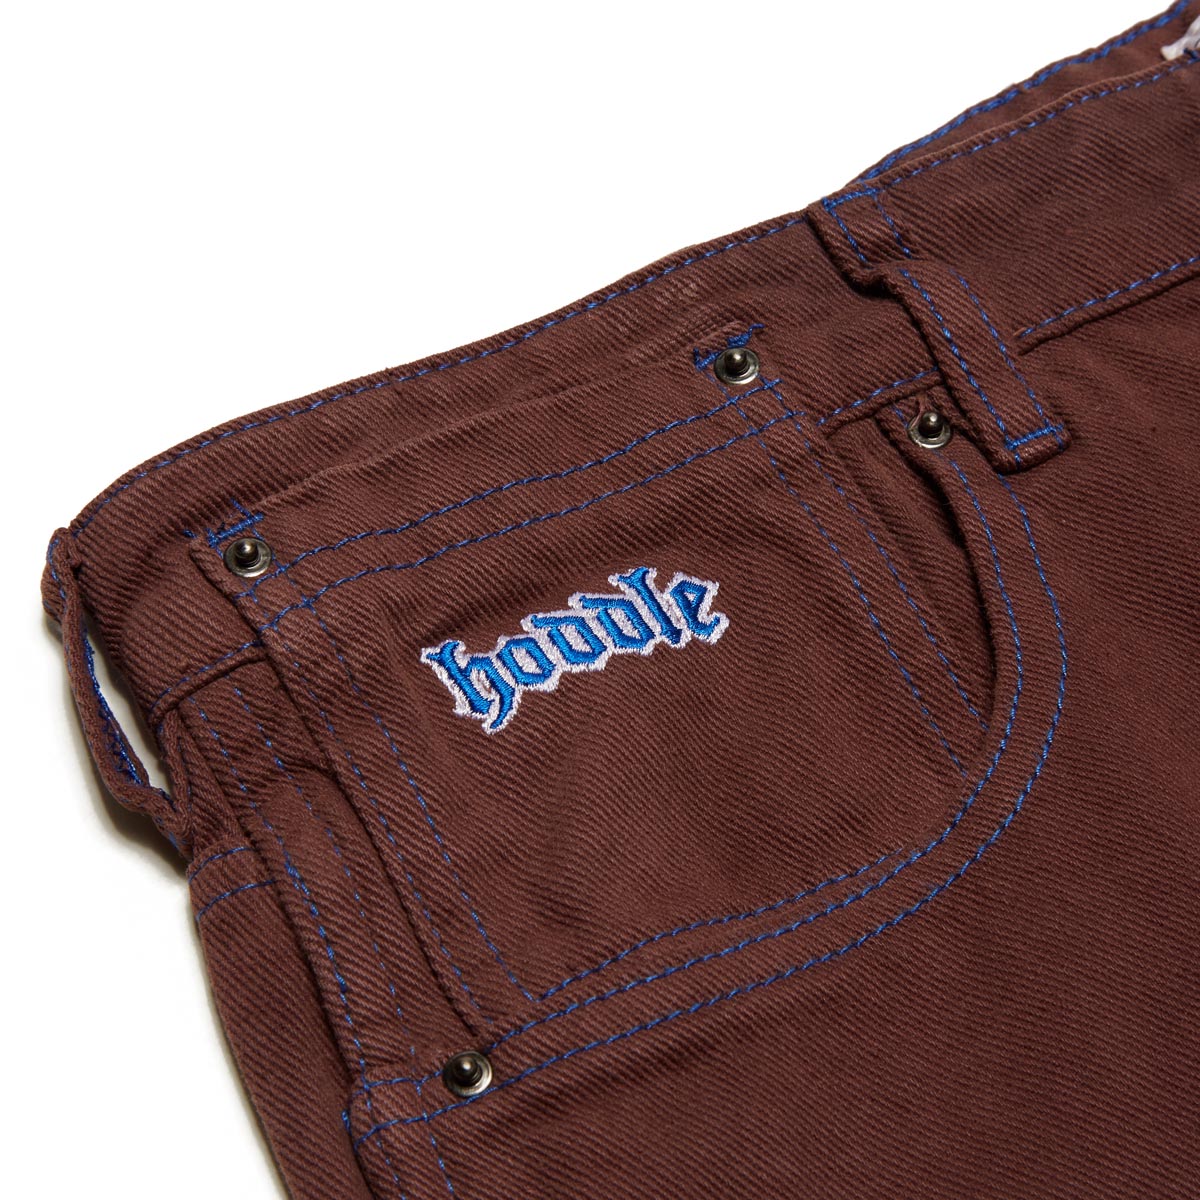 Hoddle 12o Denim Ranger Jeans - Brown/Blue Stitch image 3